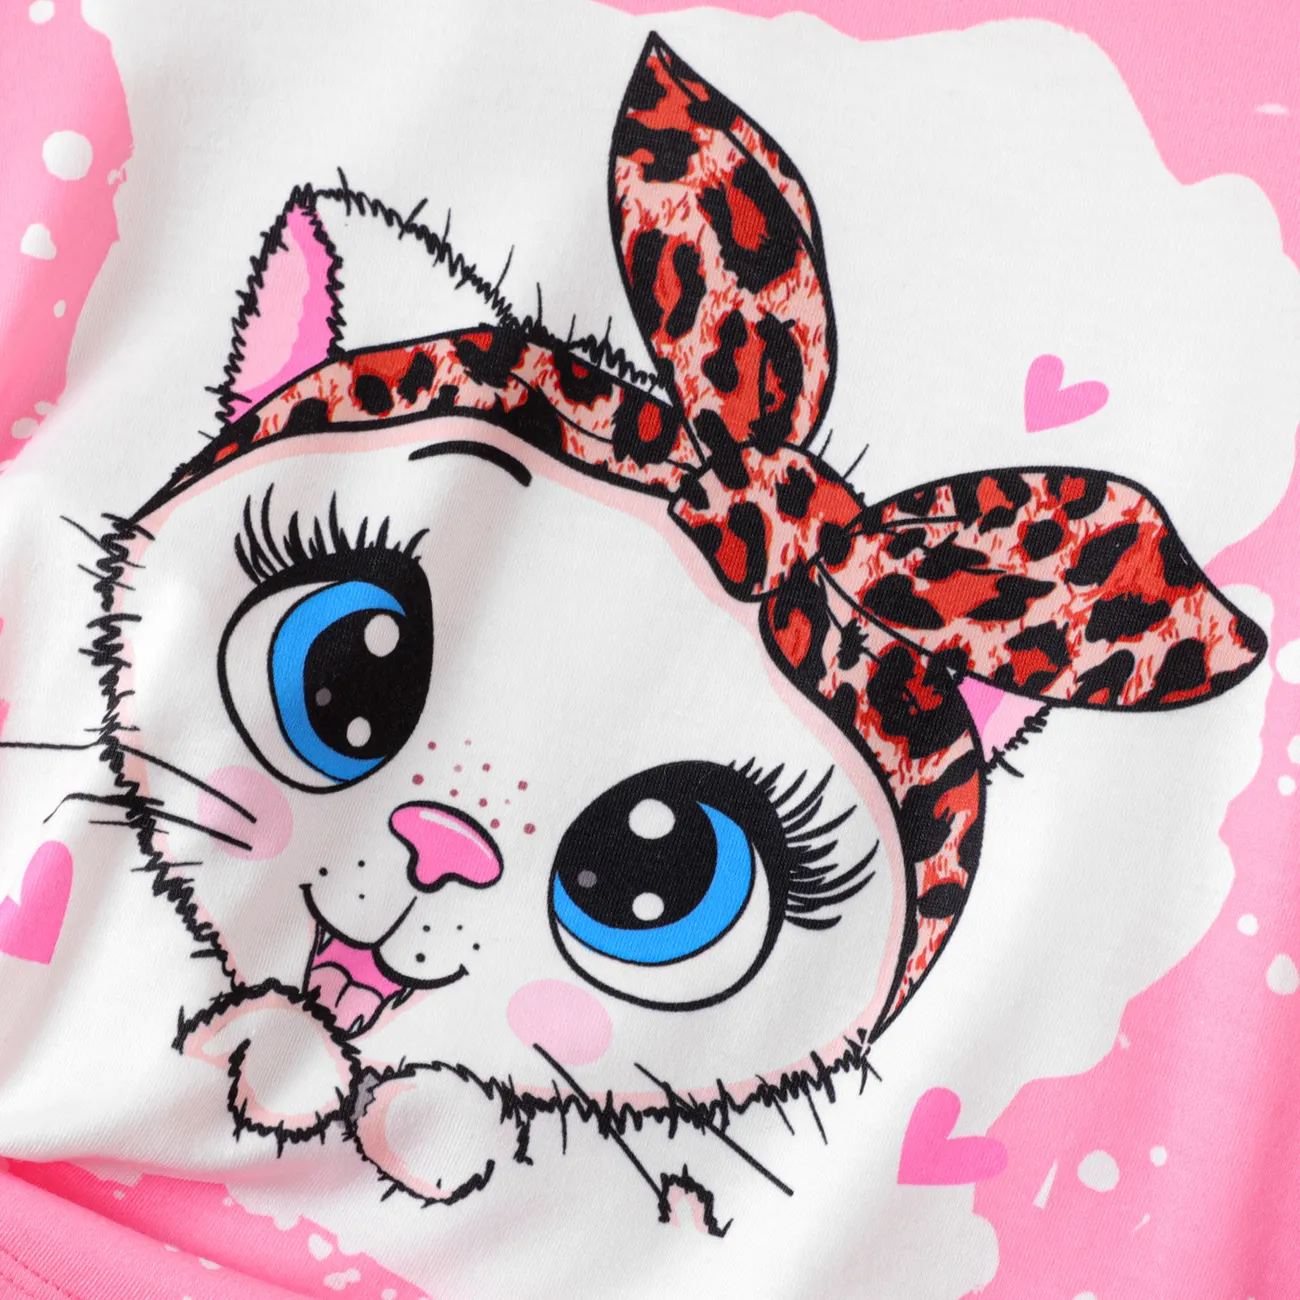 Toddler Girl Cute Cat Print Short-sleeve Tee Pink big image 1